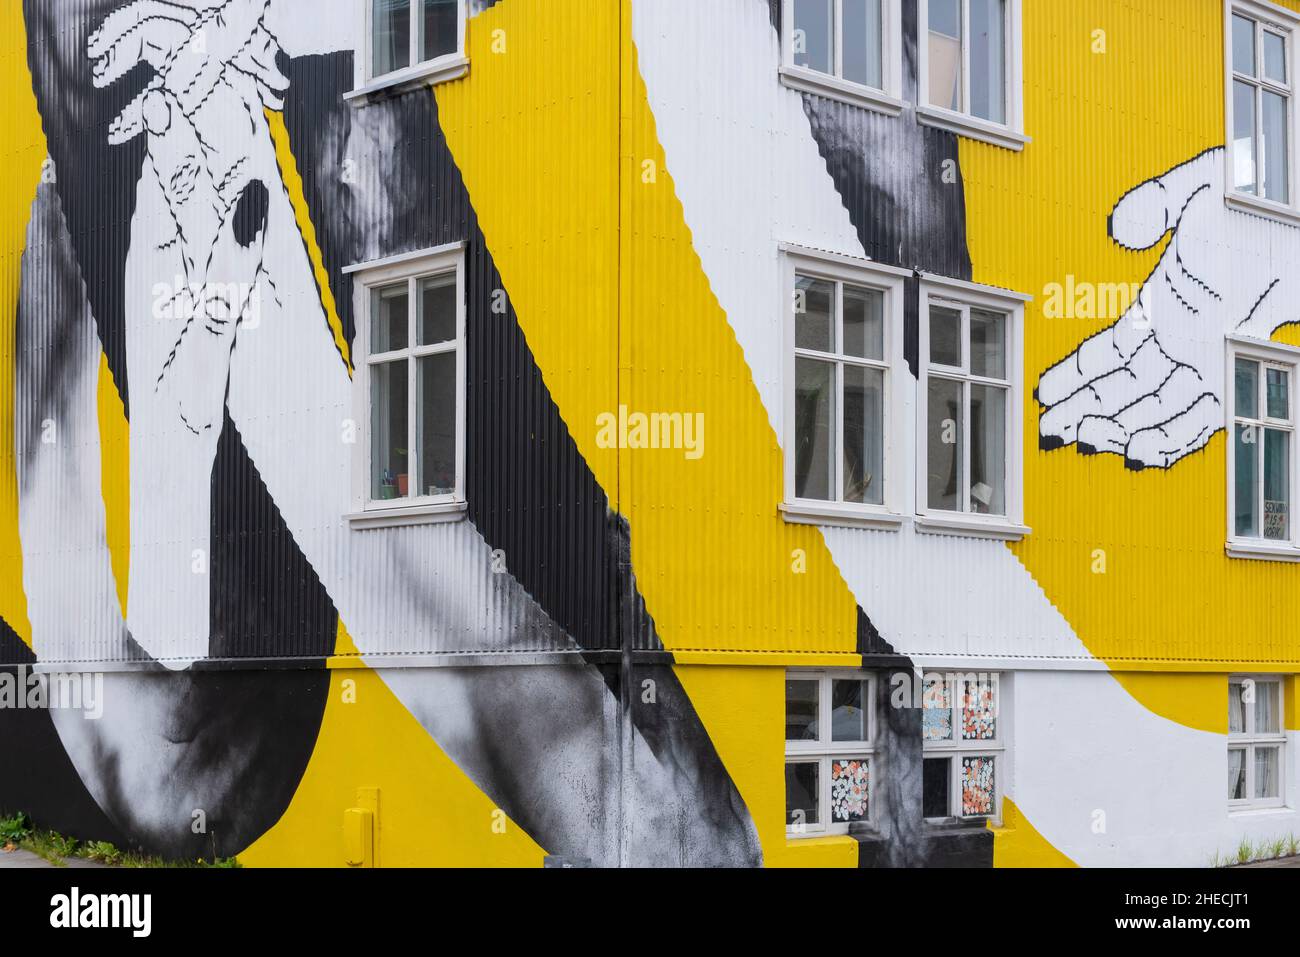 Iceland, Capital region, Reykjavik, Bergthorugata, mural on the walls, street art Stock Photo